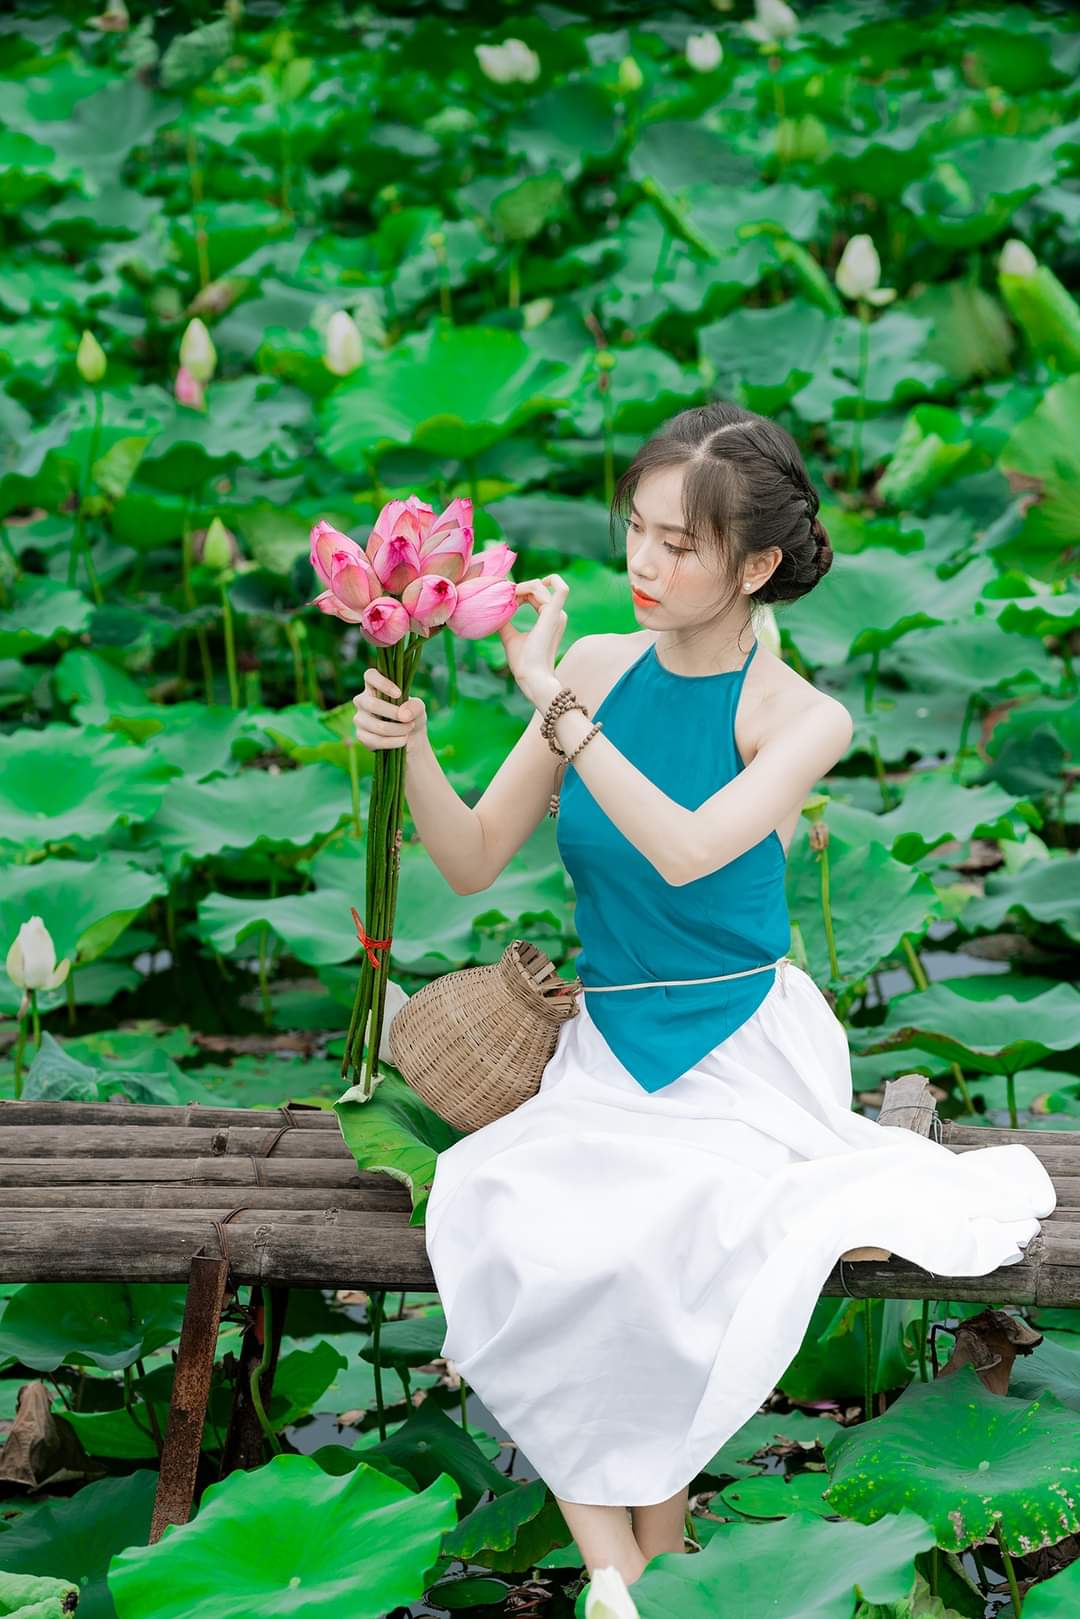 Pretty Vietnamese Girls 23.08.11.2 lotus Season